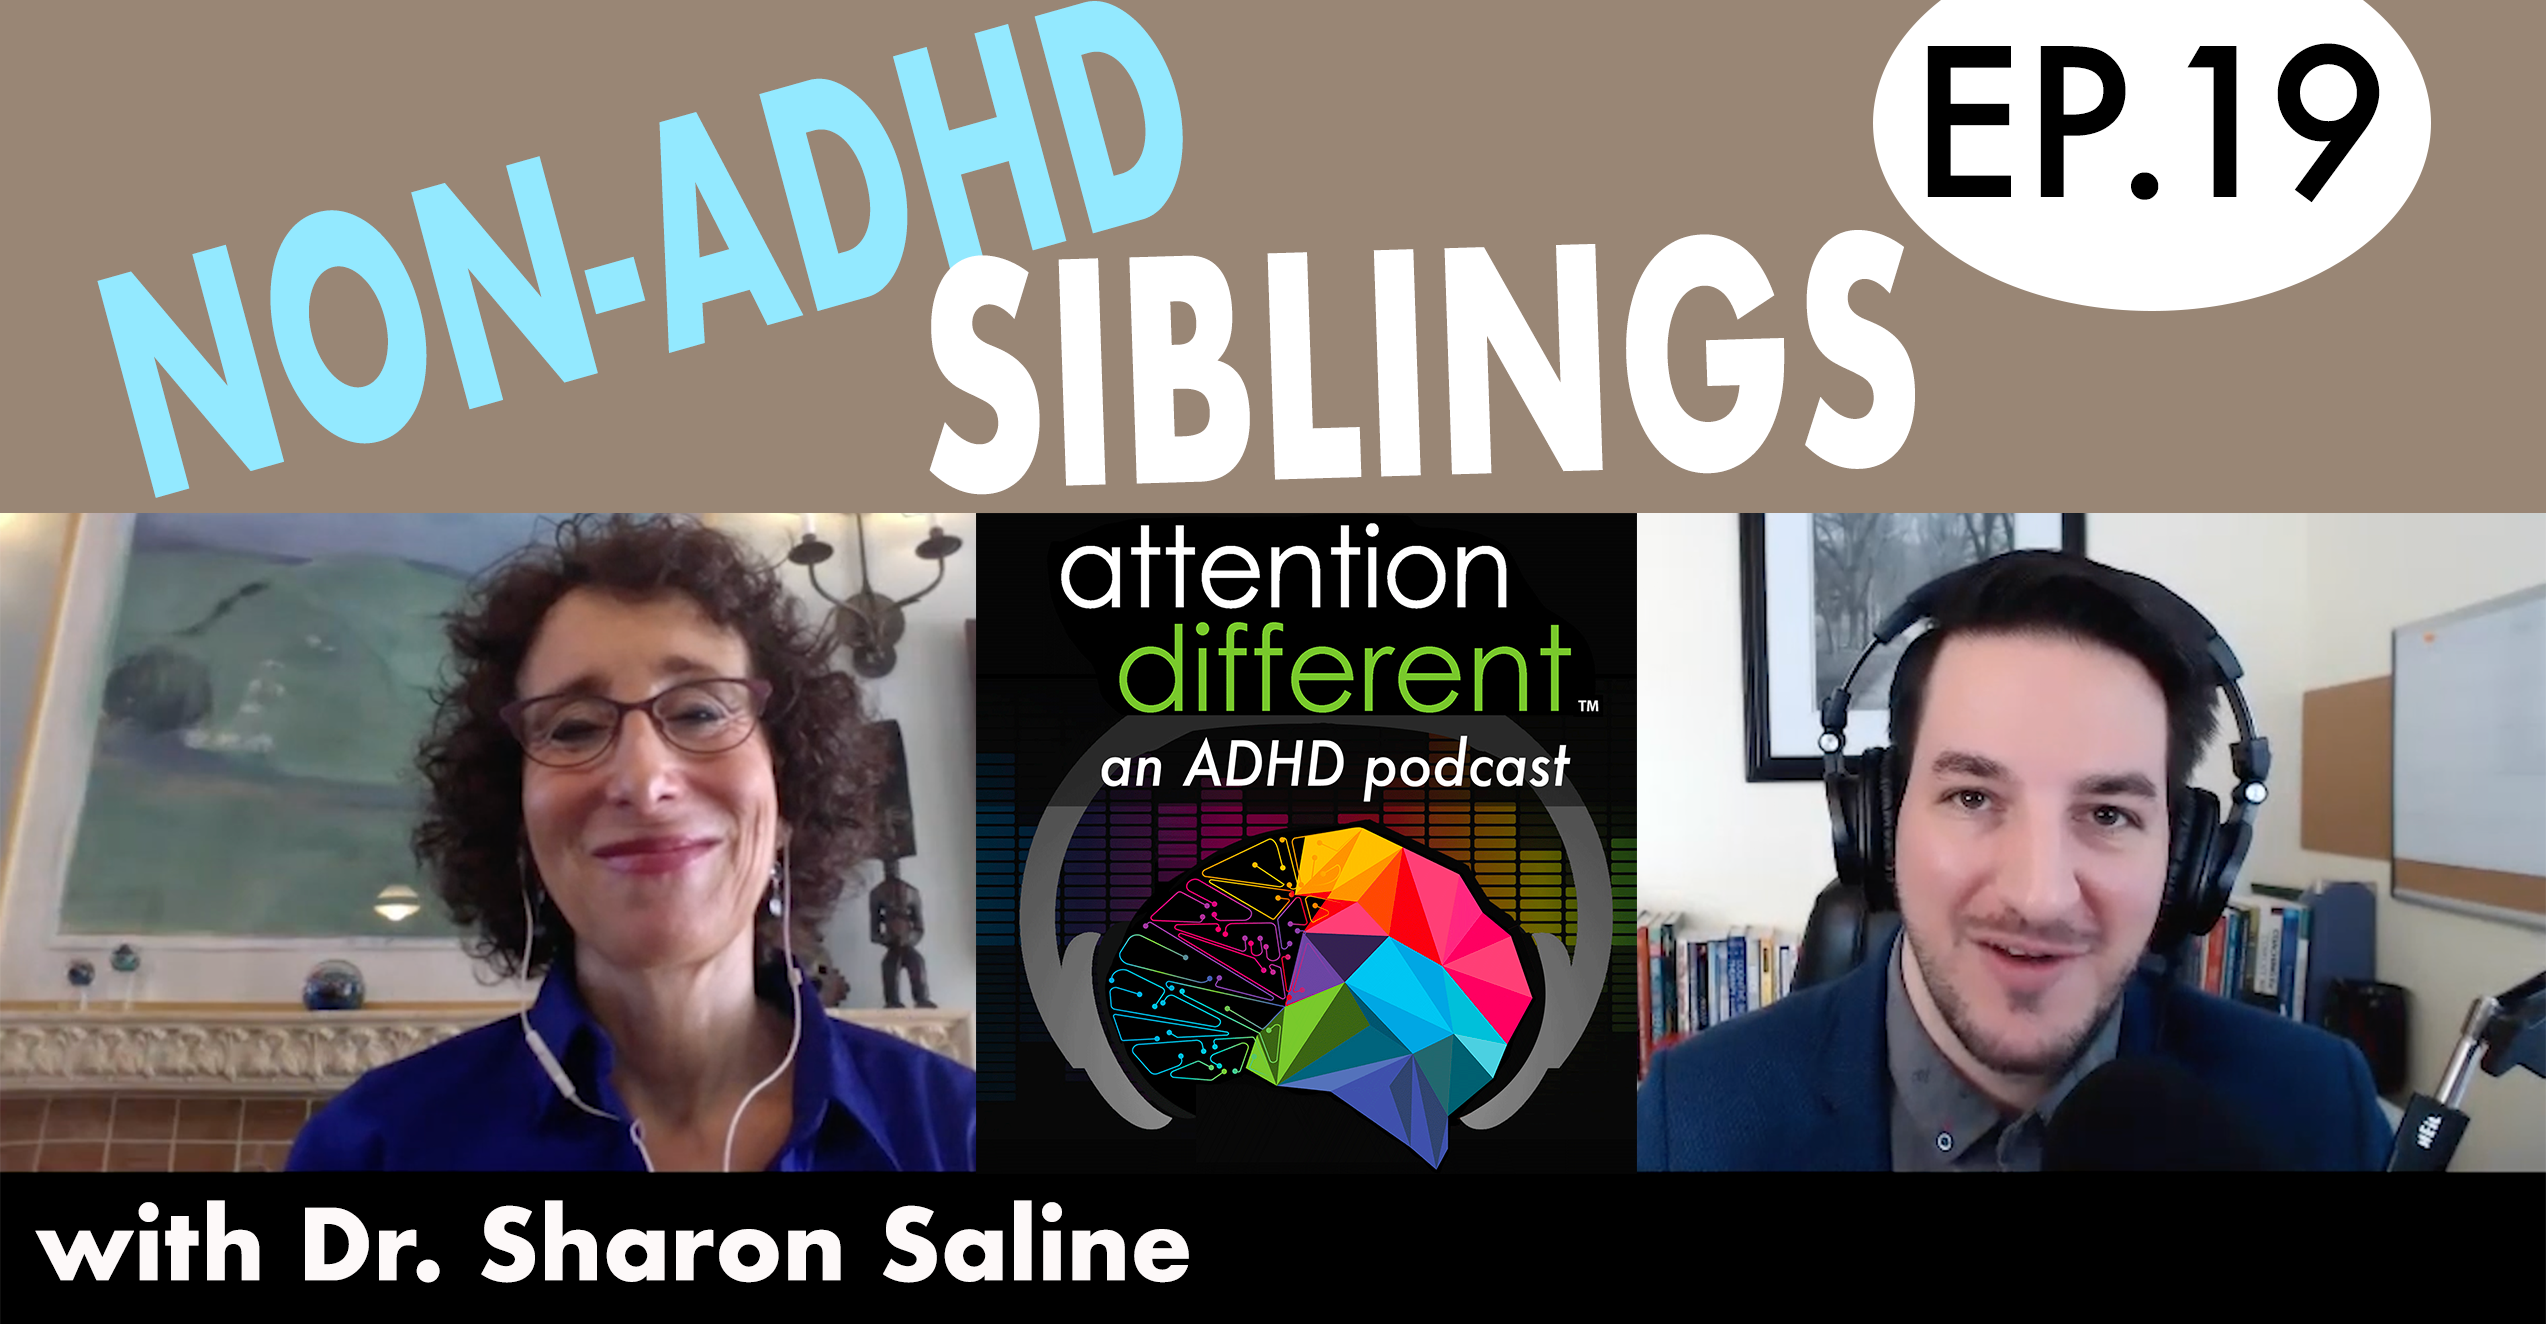 EP 19 - Non-ADHD Siblings